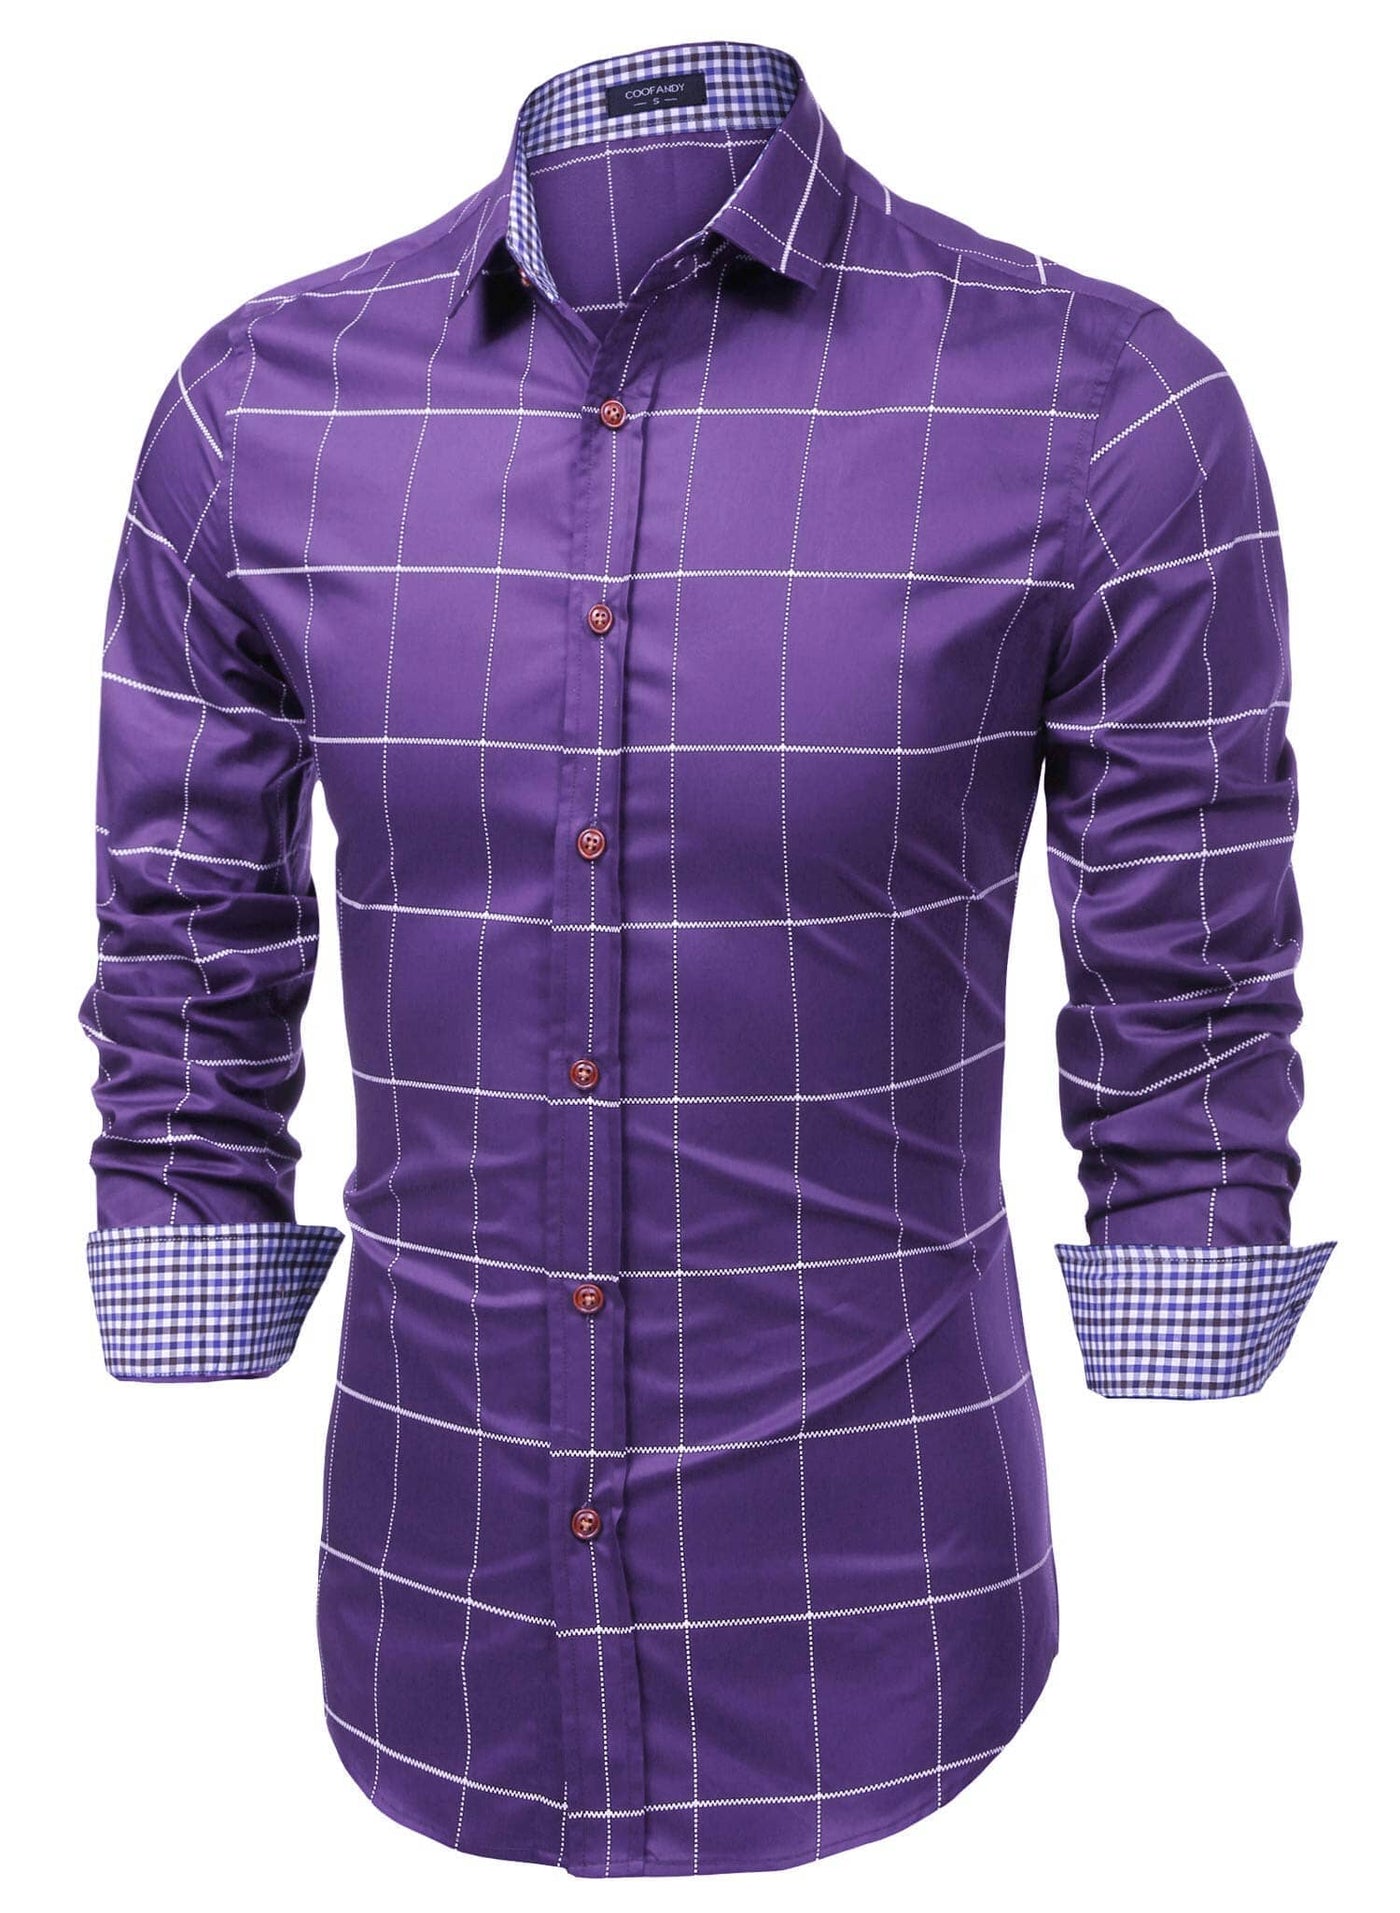 Coofandy Fashion Dress Shirt (US Only) Shirts coofandy Purple S 